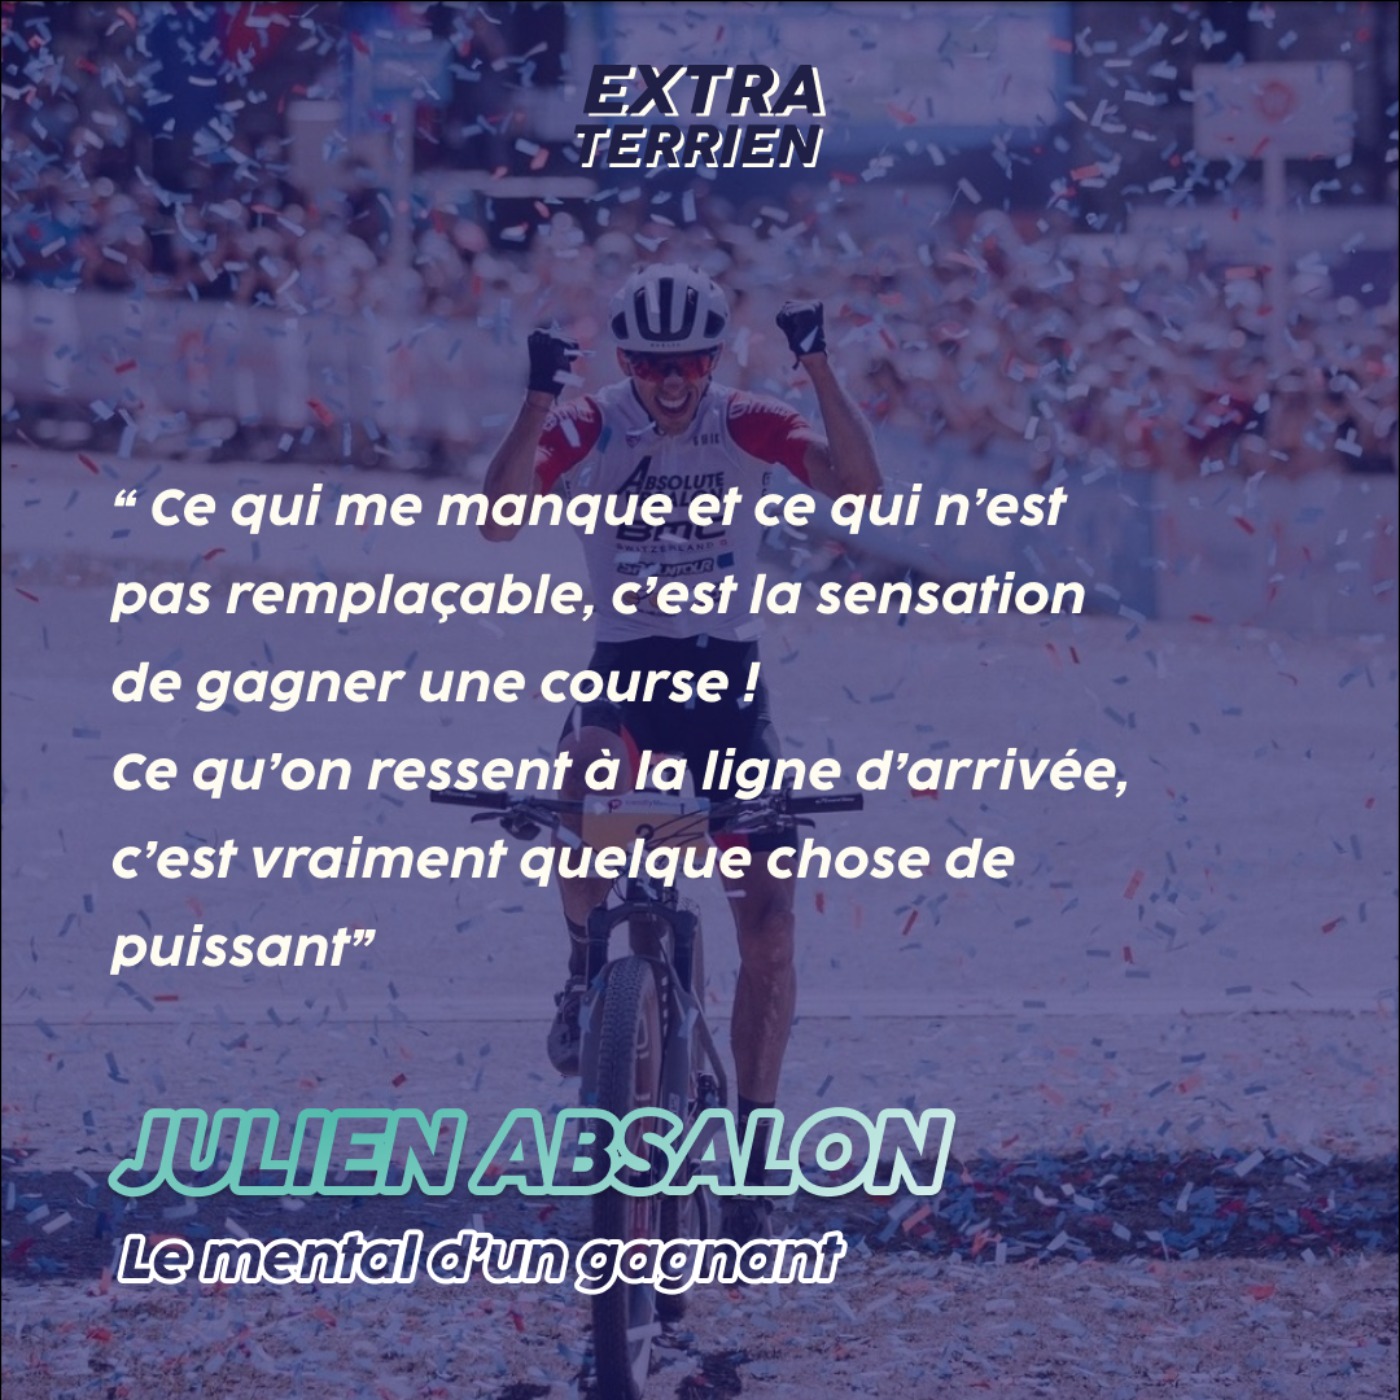 Extrait - Julien Absalon